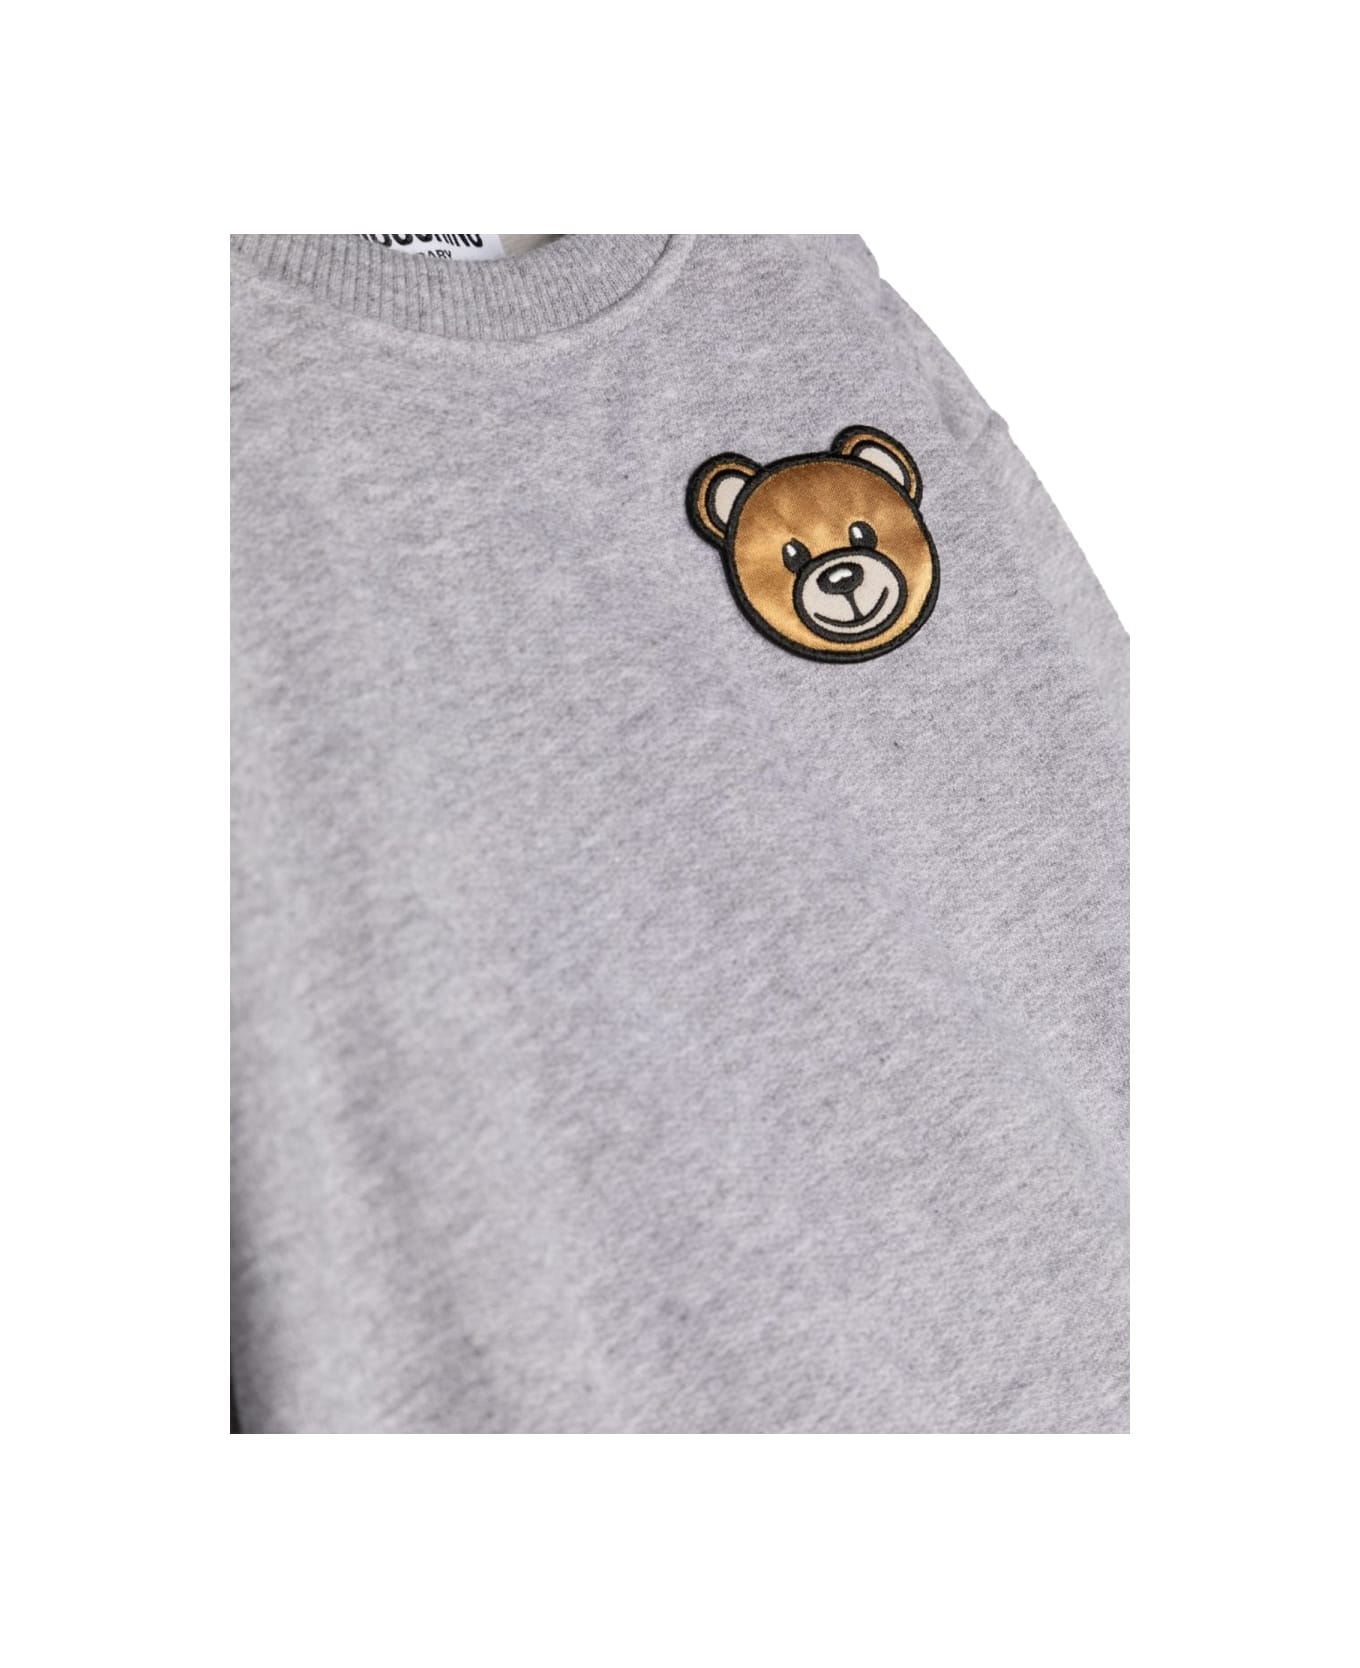 Moschino Teddy Bear Crewneck Sweatshirt - GREY